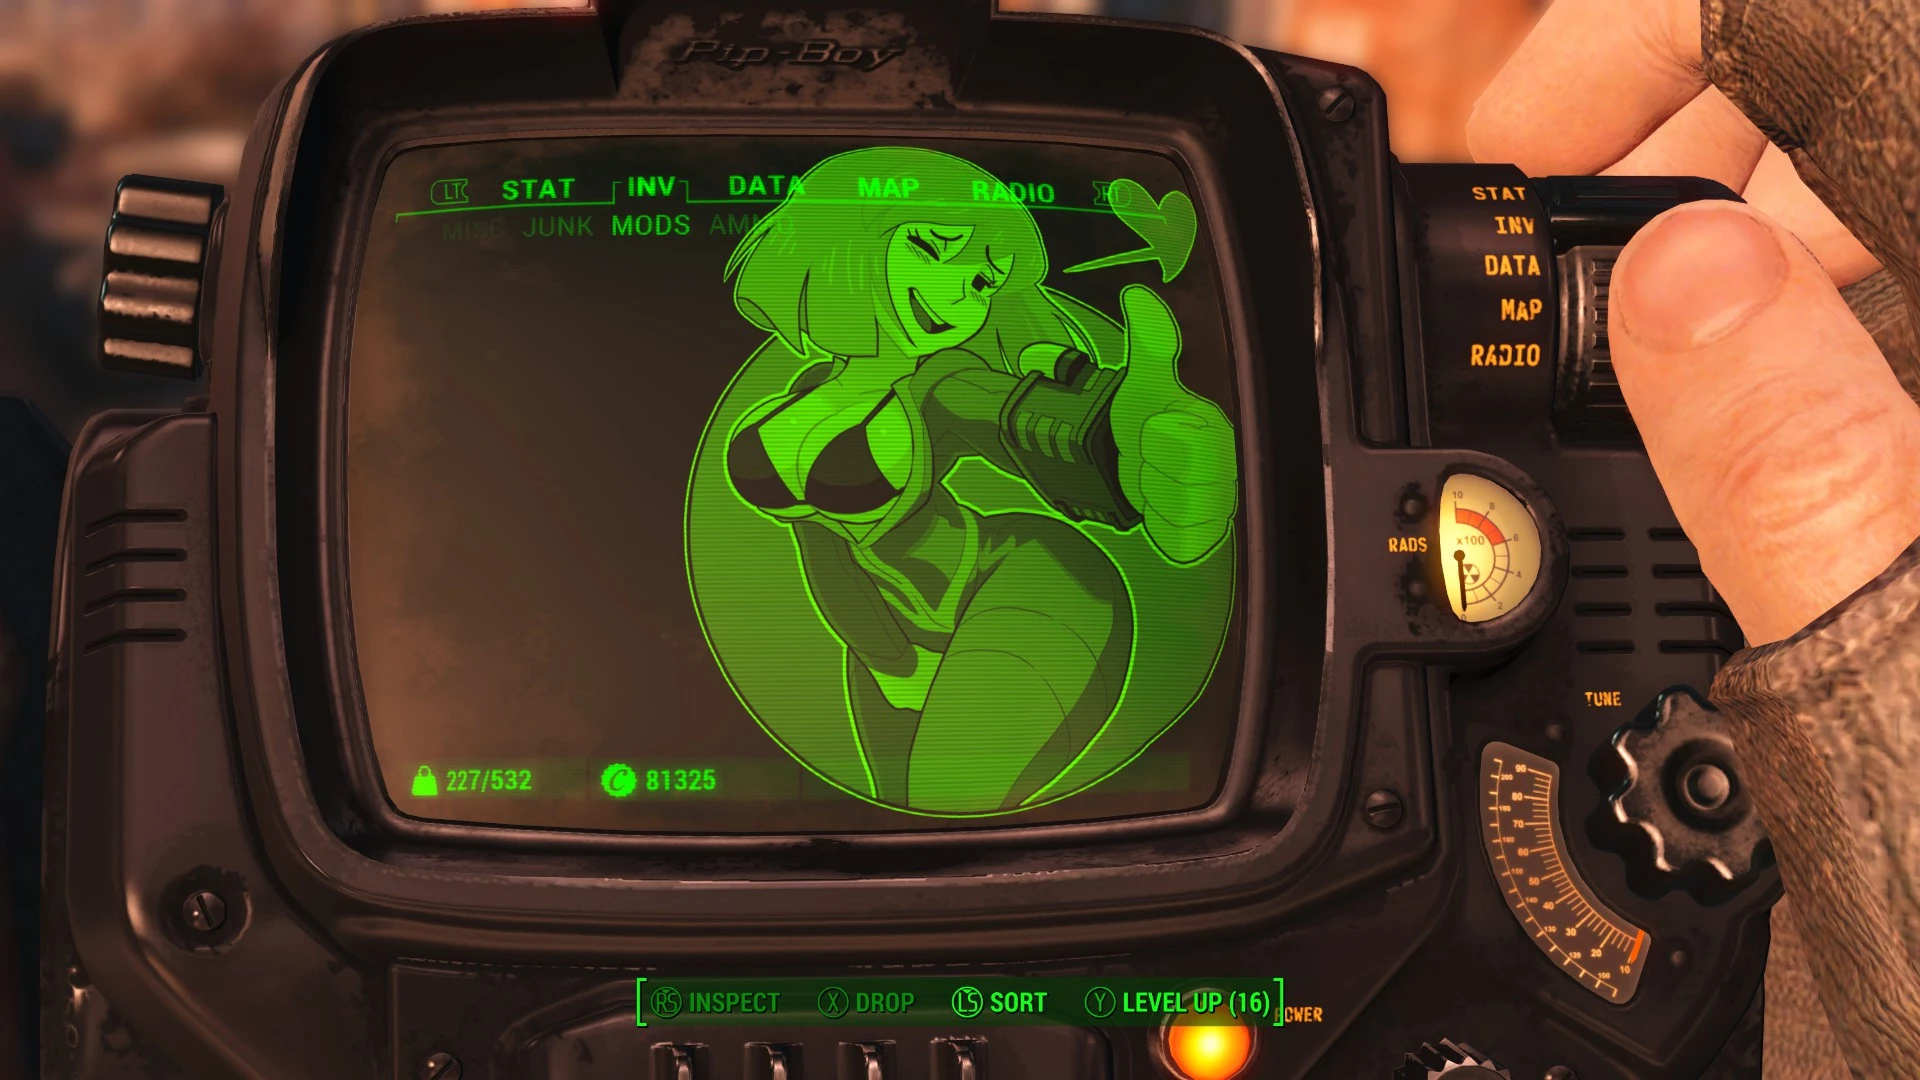 Девушка играла в Fallout 4 на оранжевом пуфе и бойфренд отодрал её в очко